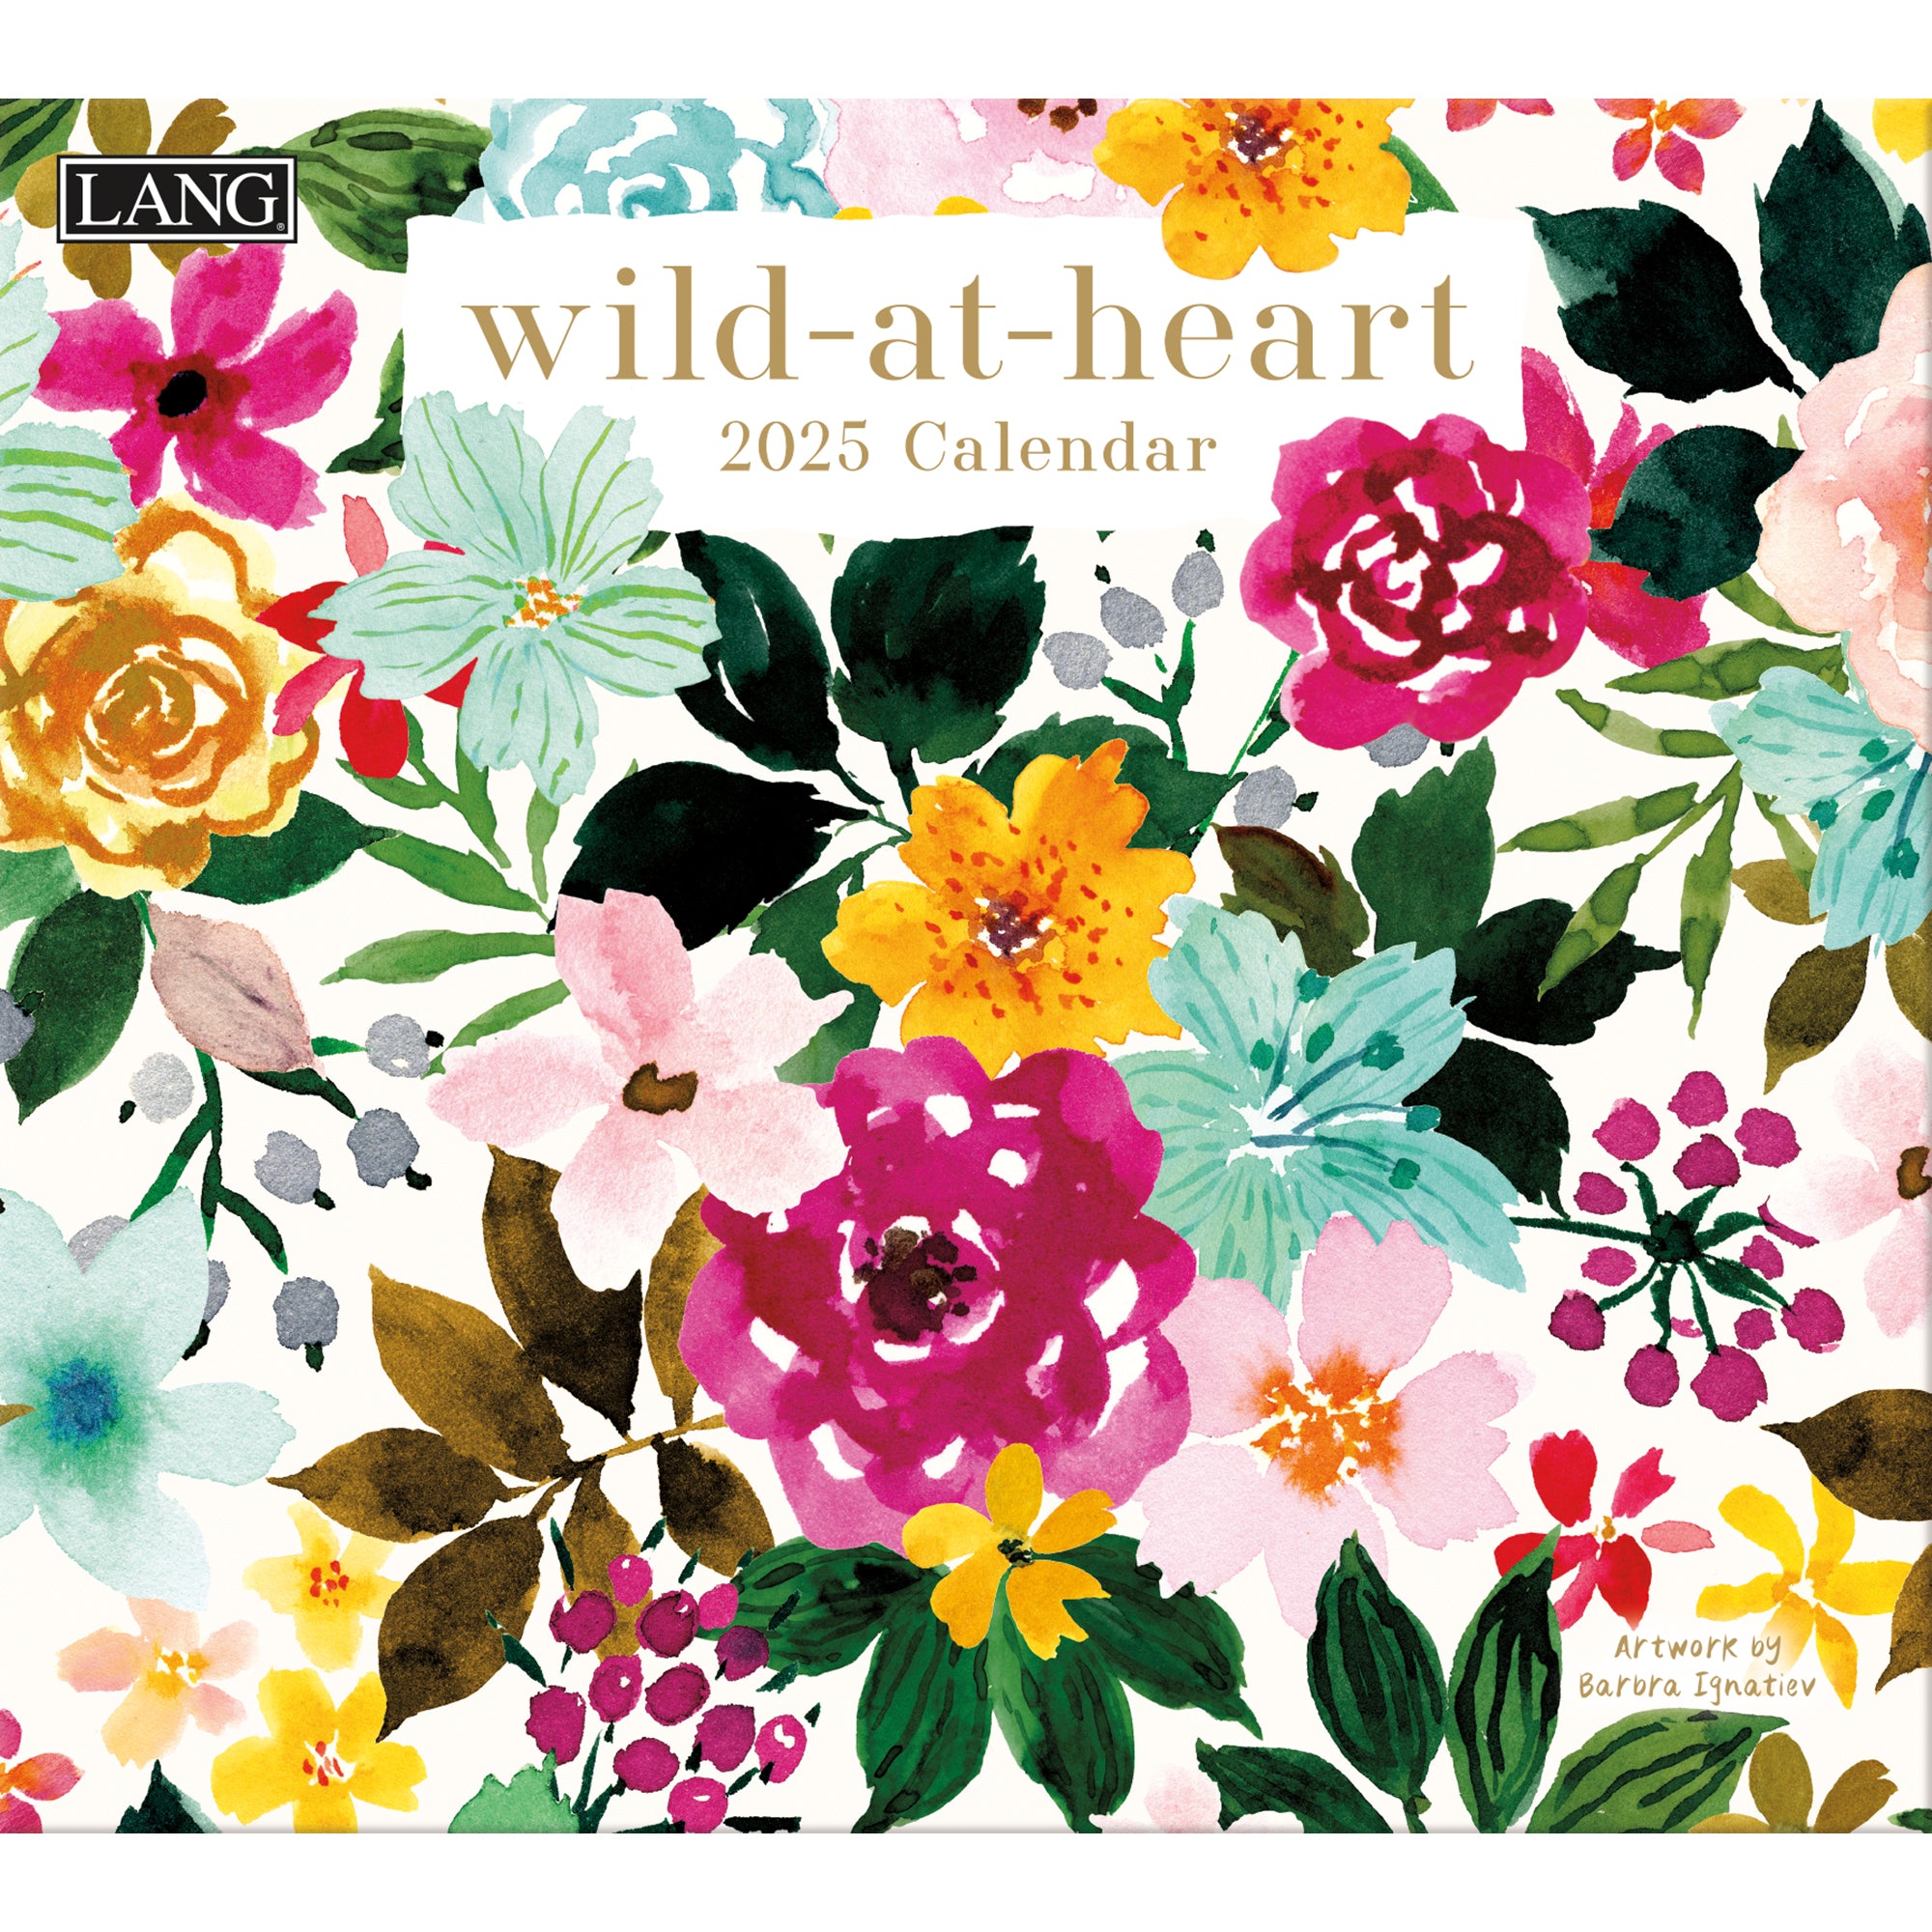 2025 Wild-At-Heart by Barbra Ignatiev - LANG Deluxe Wall Calendar